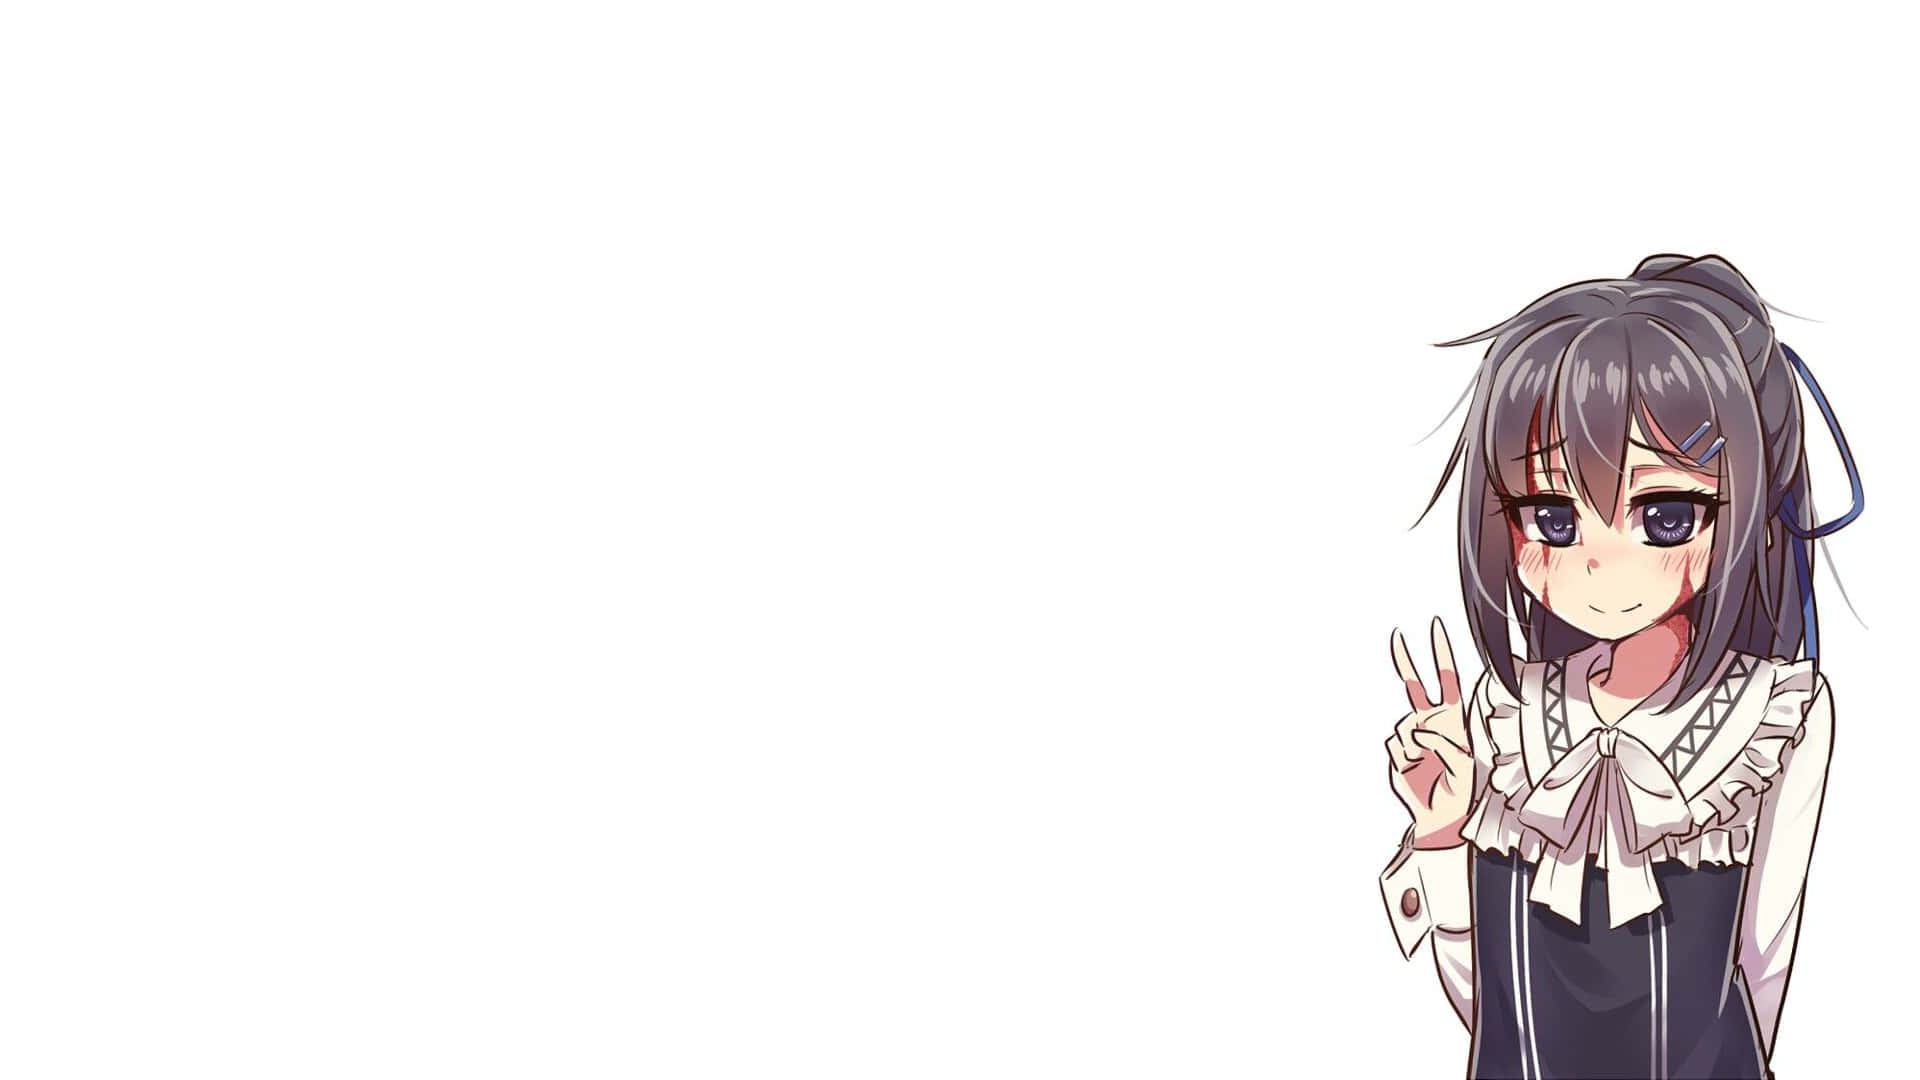 Blushing Anime Girl In Peace Sign Wallpaper